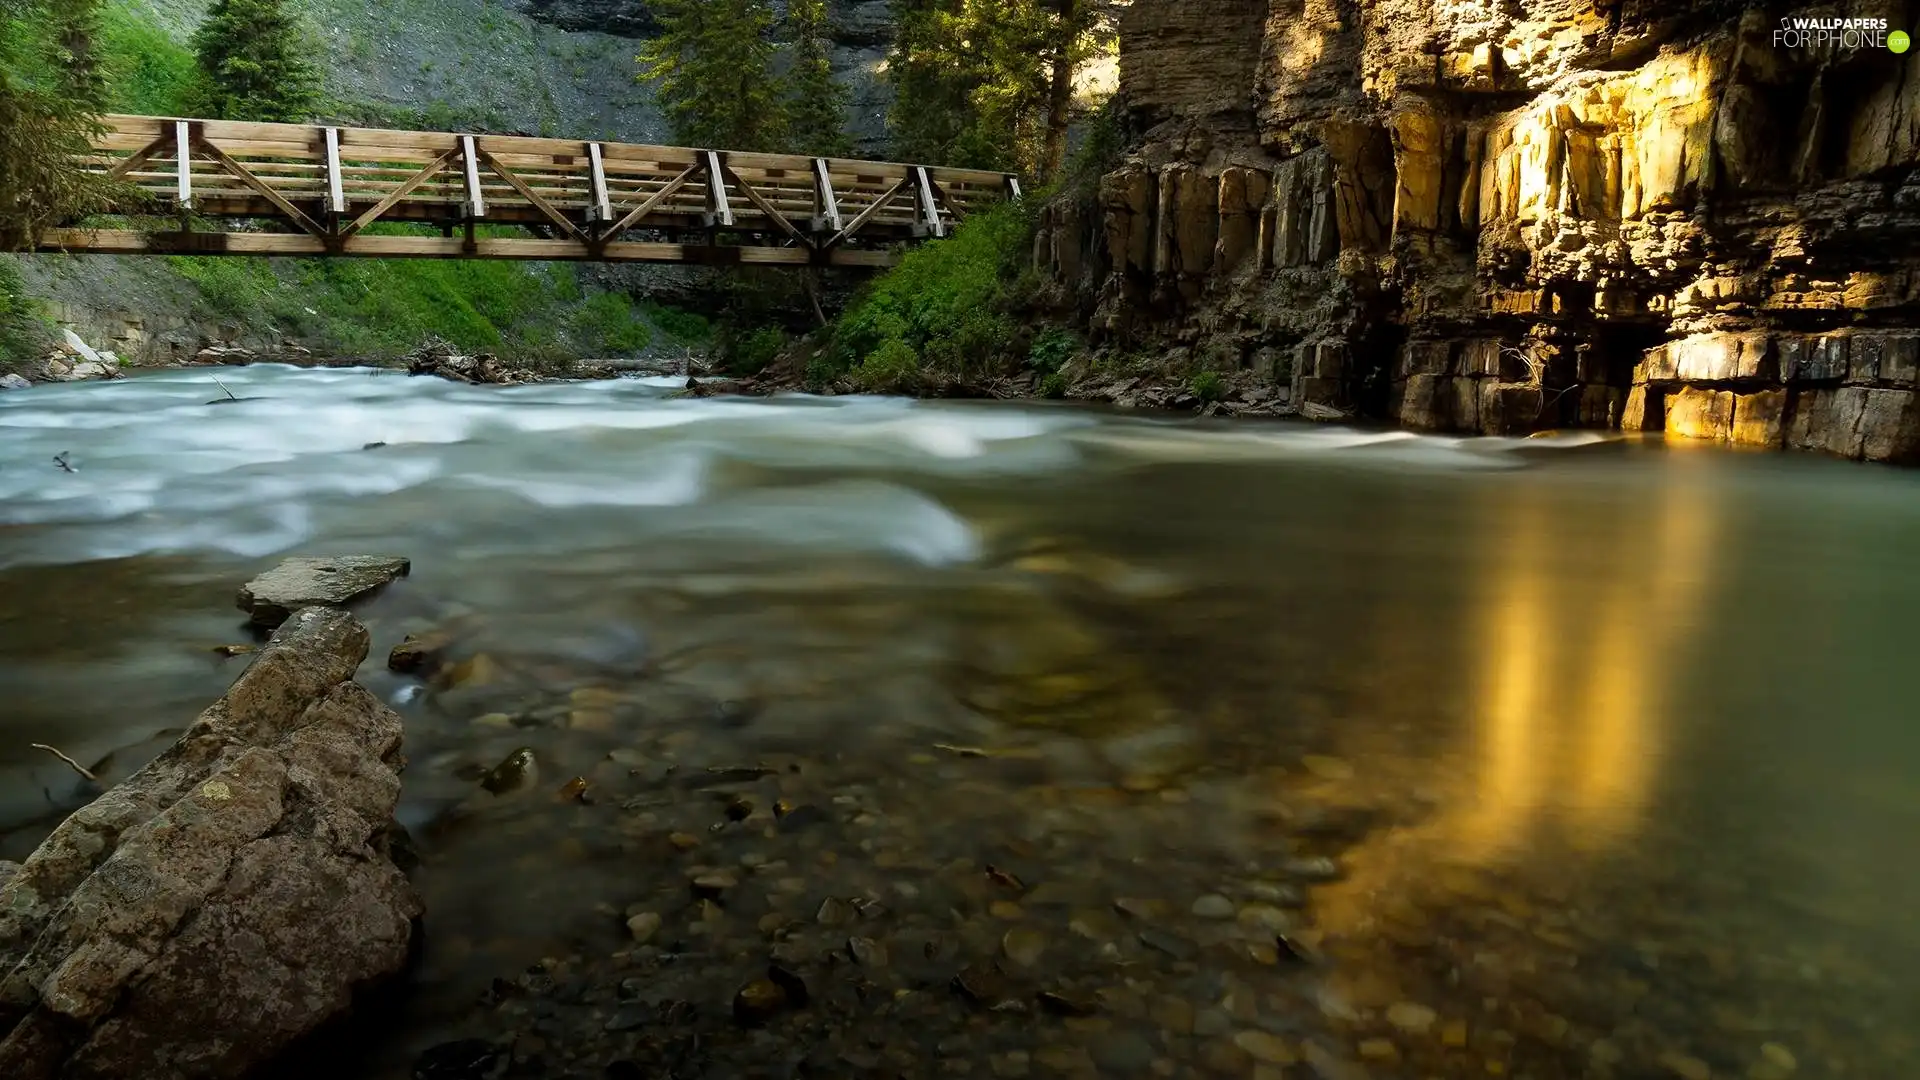 River, bridge, rocks, wooden